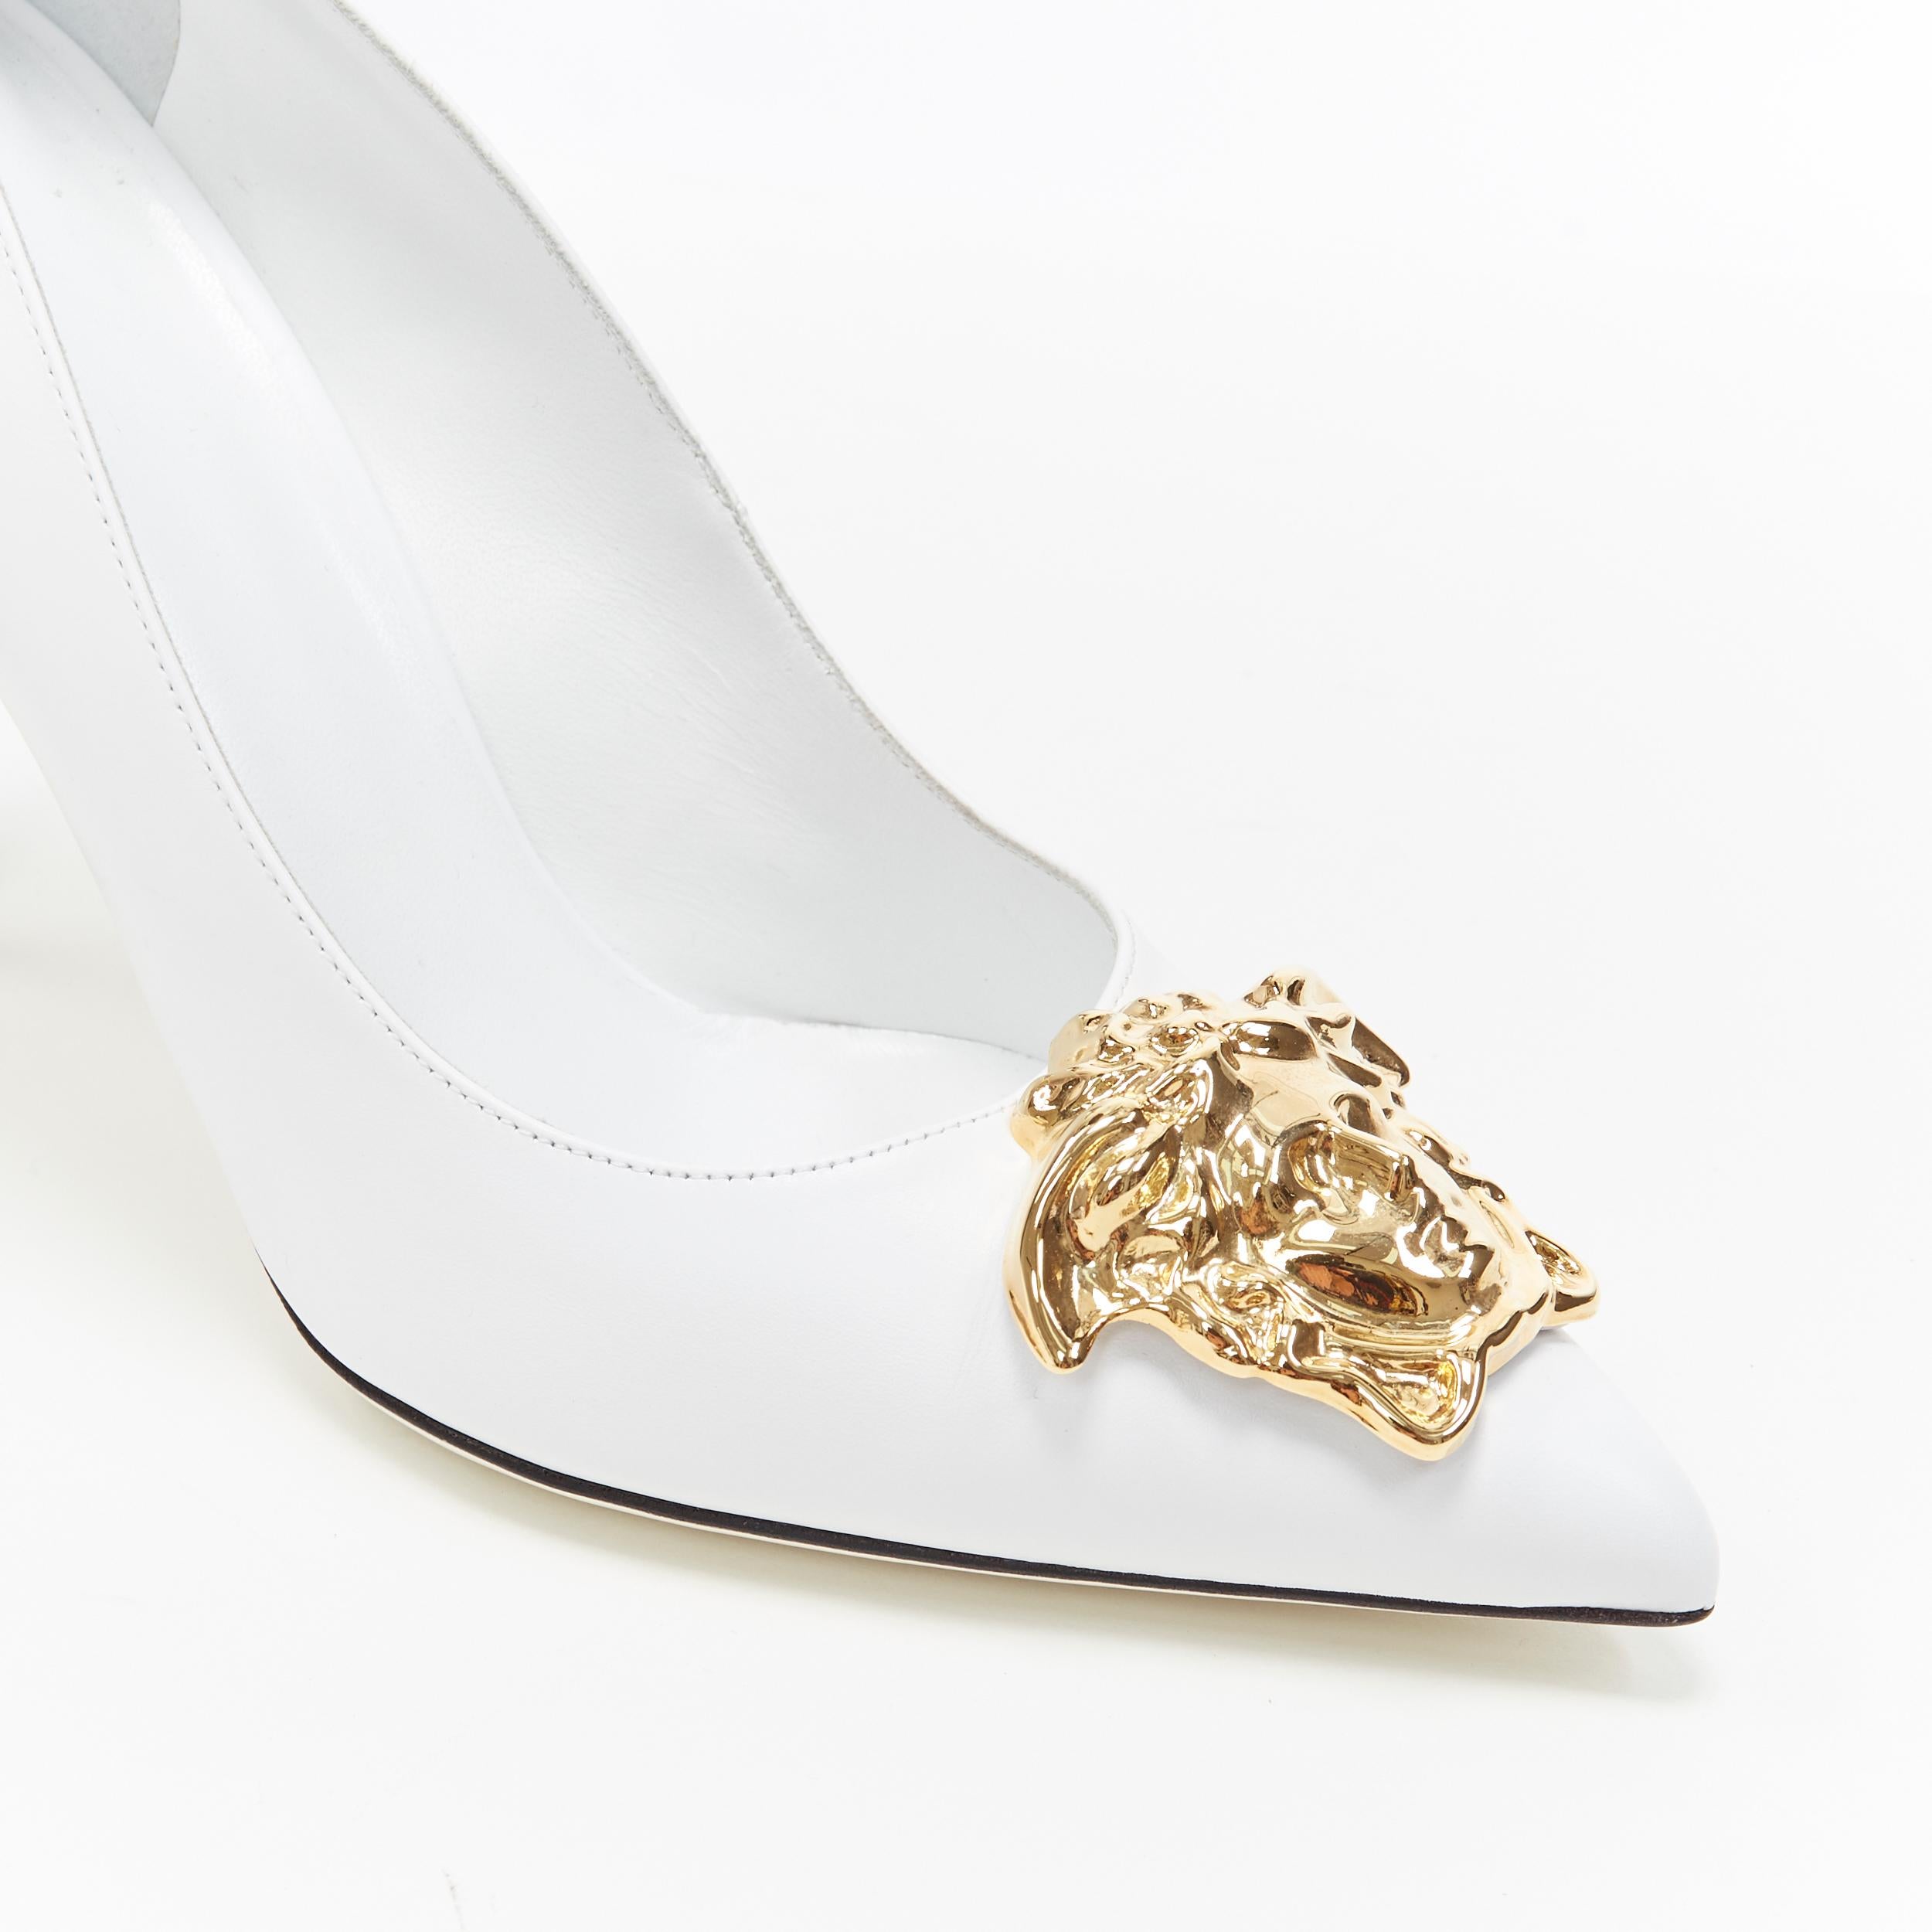 new VERSACE Palazzo Medusa white leather gold pointed toe metal heel pump EU39 1